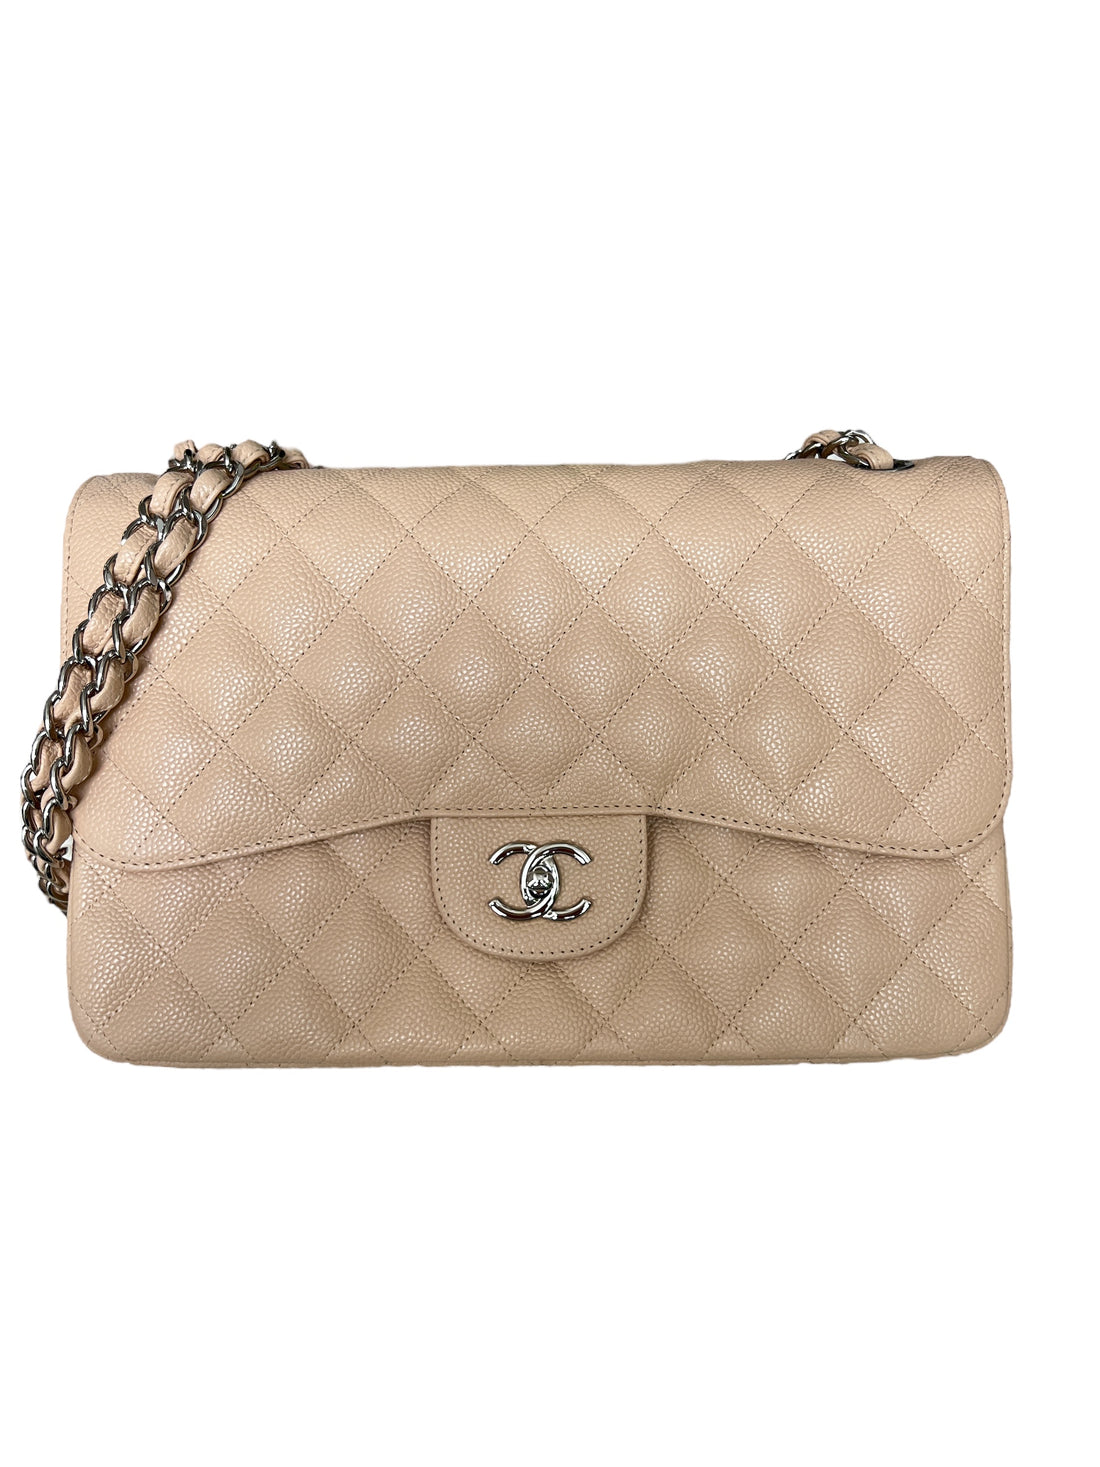 Chanel Classic Double Flap Bag aus beigem Caviarleder